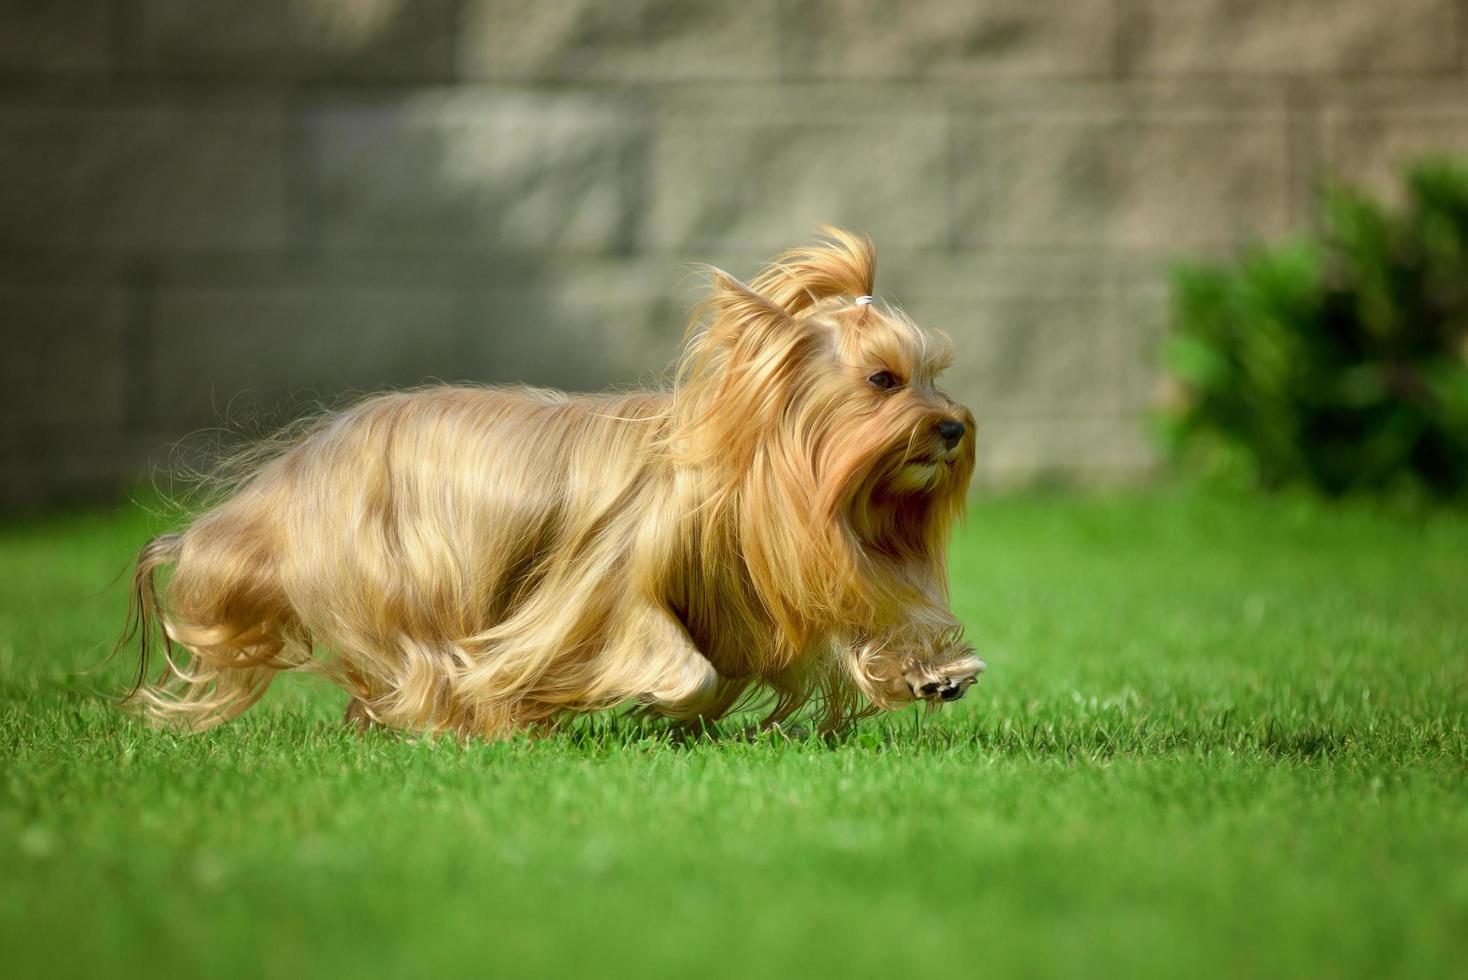 yorkshire terrier lang haar runnin op groene weide in park foto